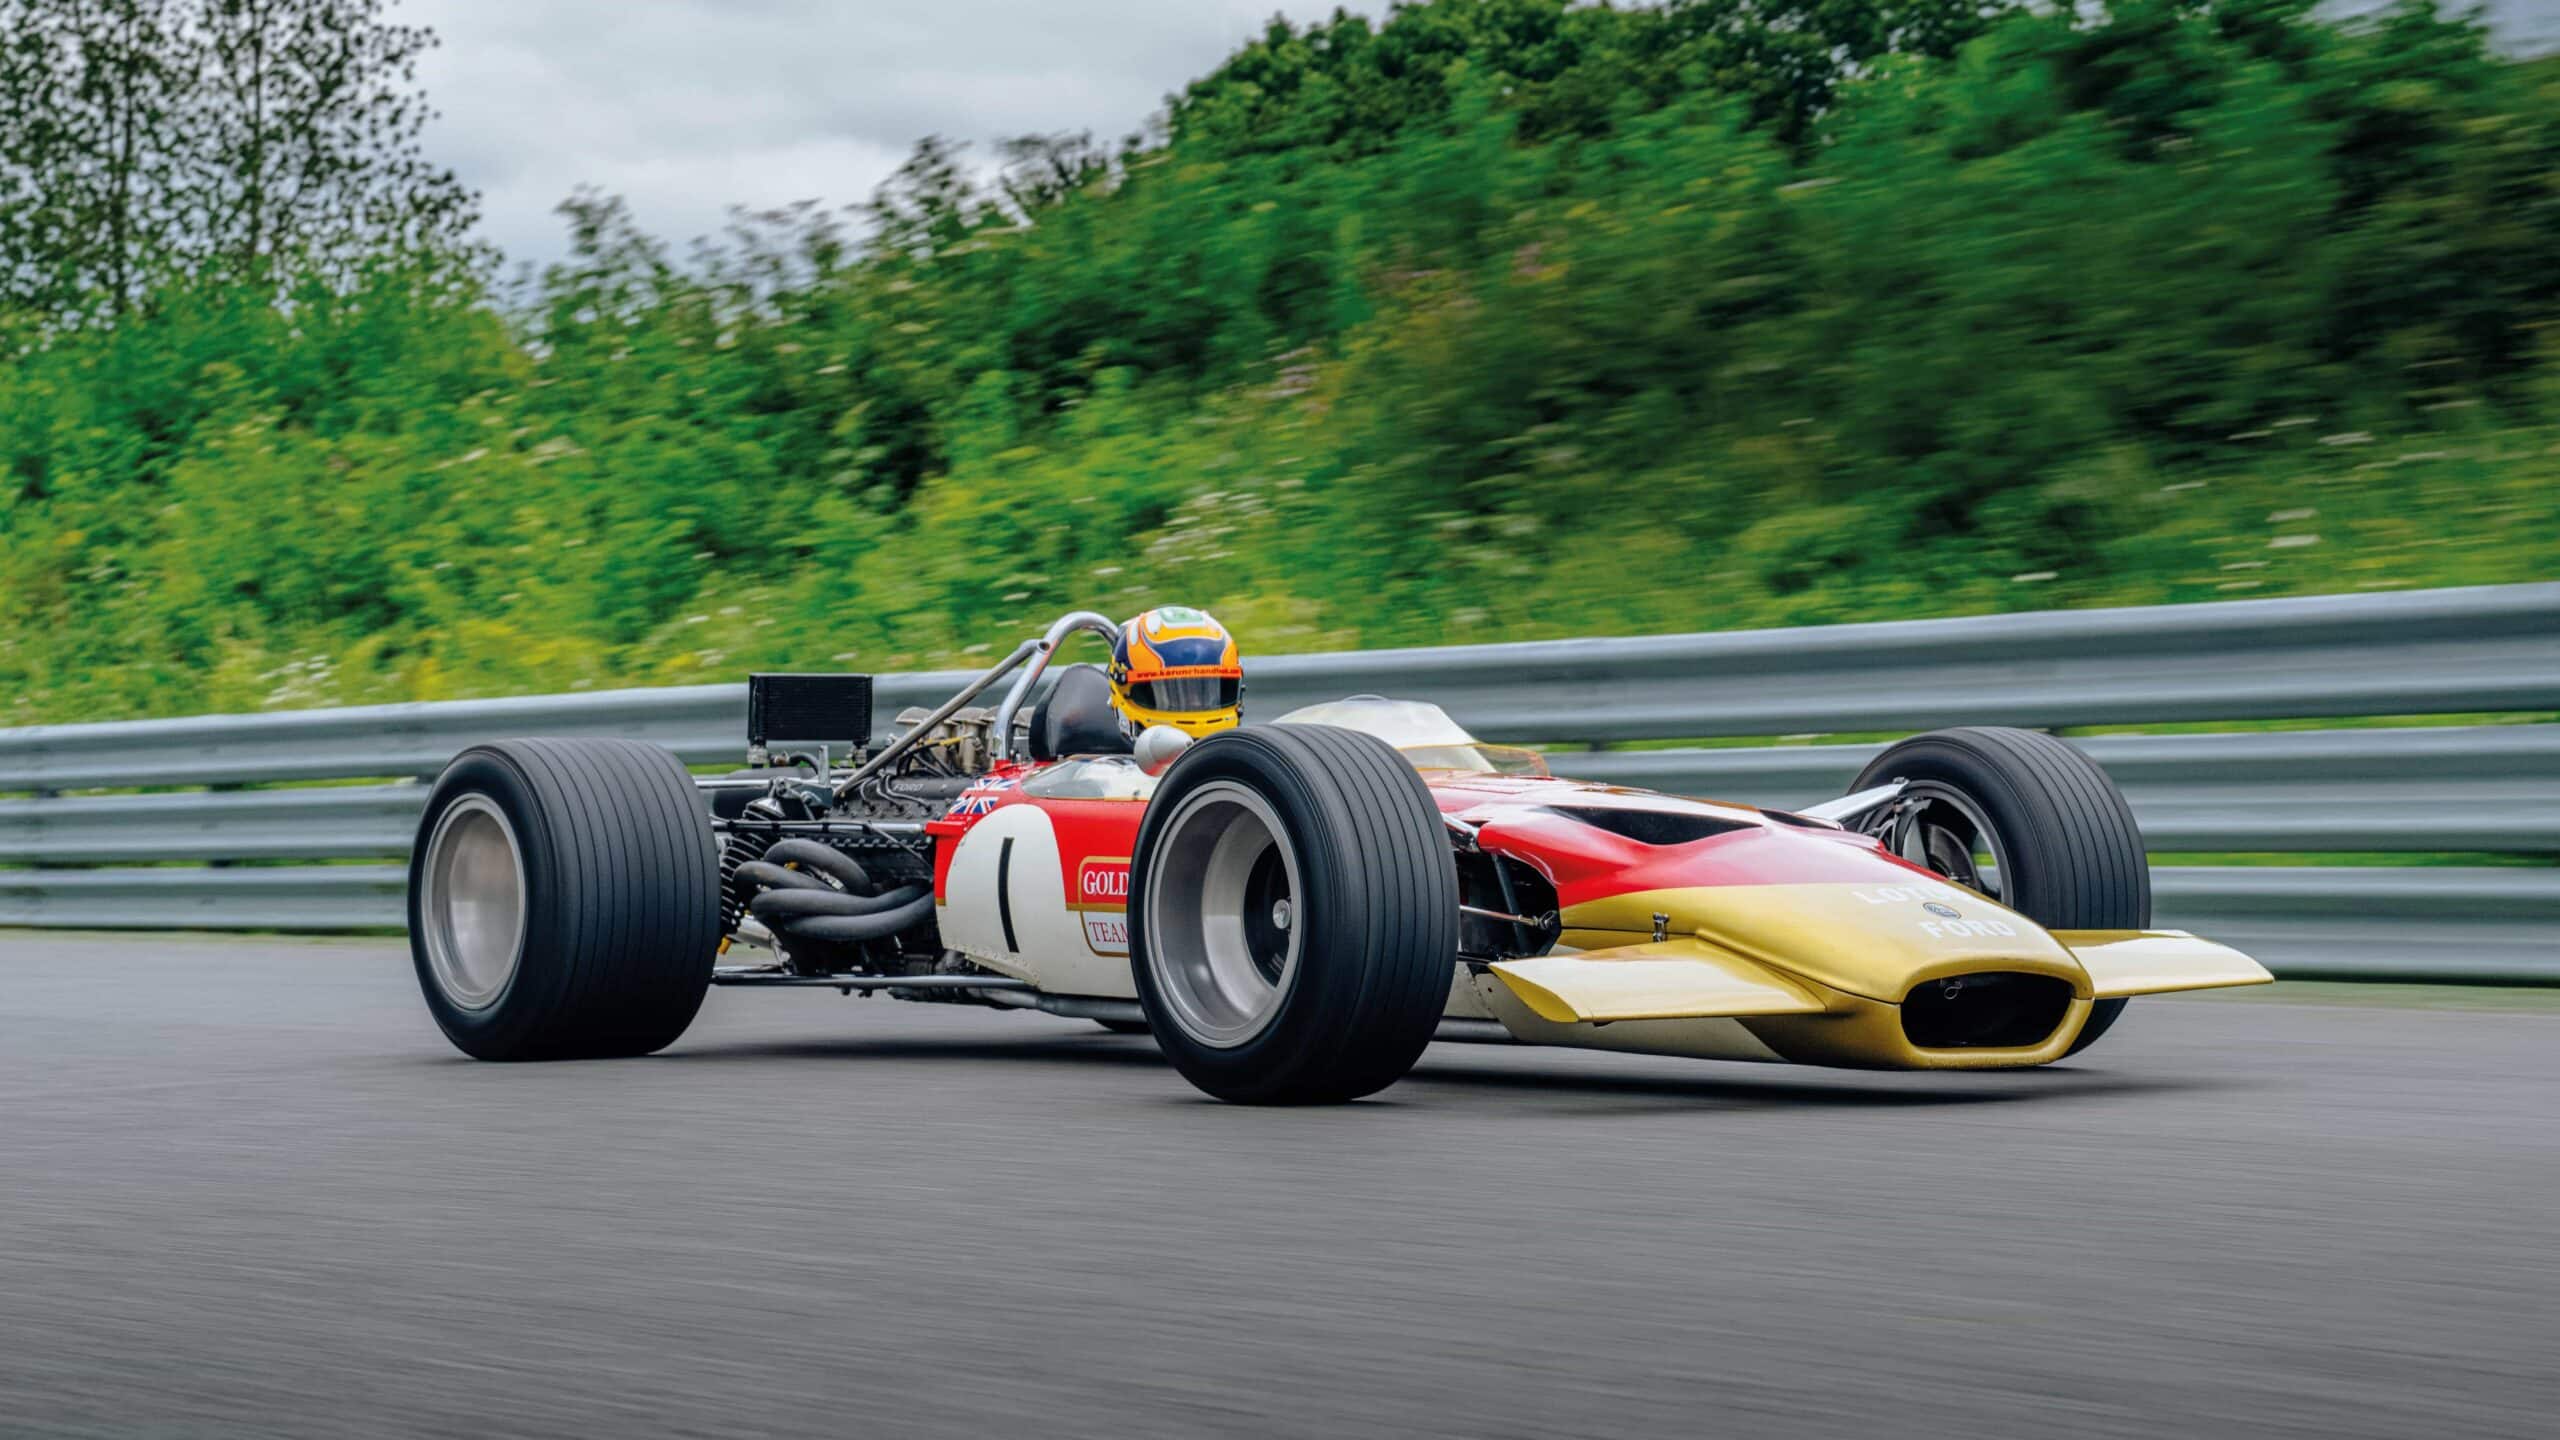 Karun Chandhok drives the Lotus 49